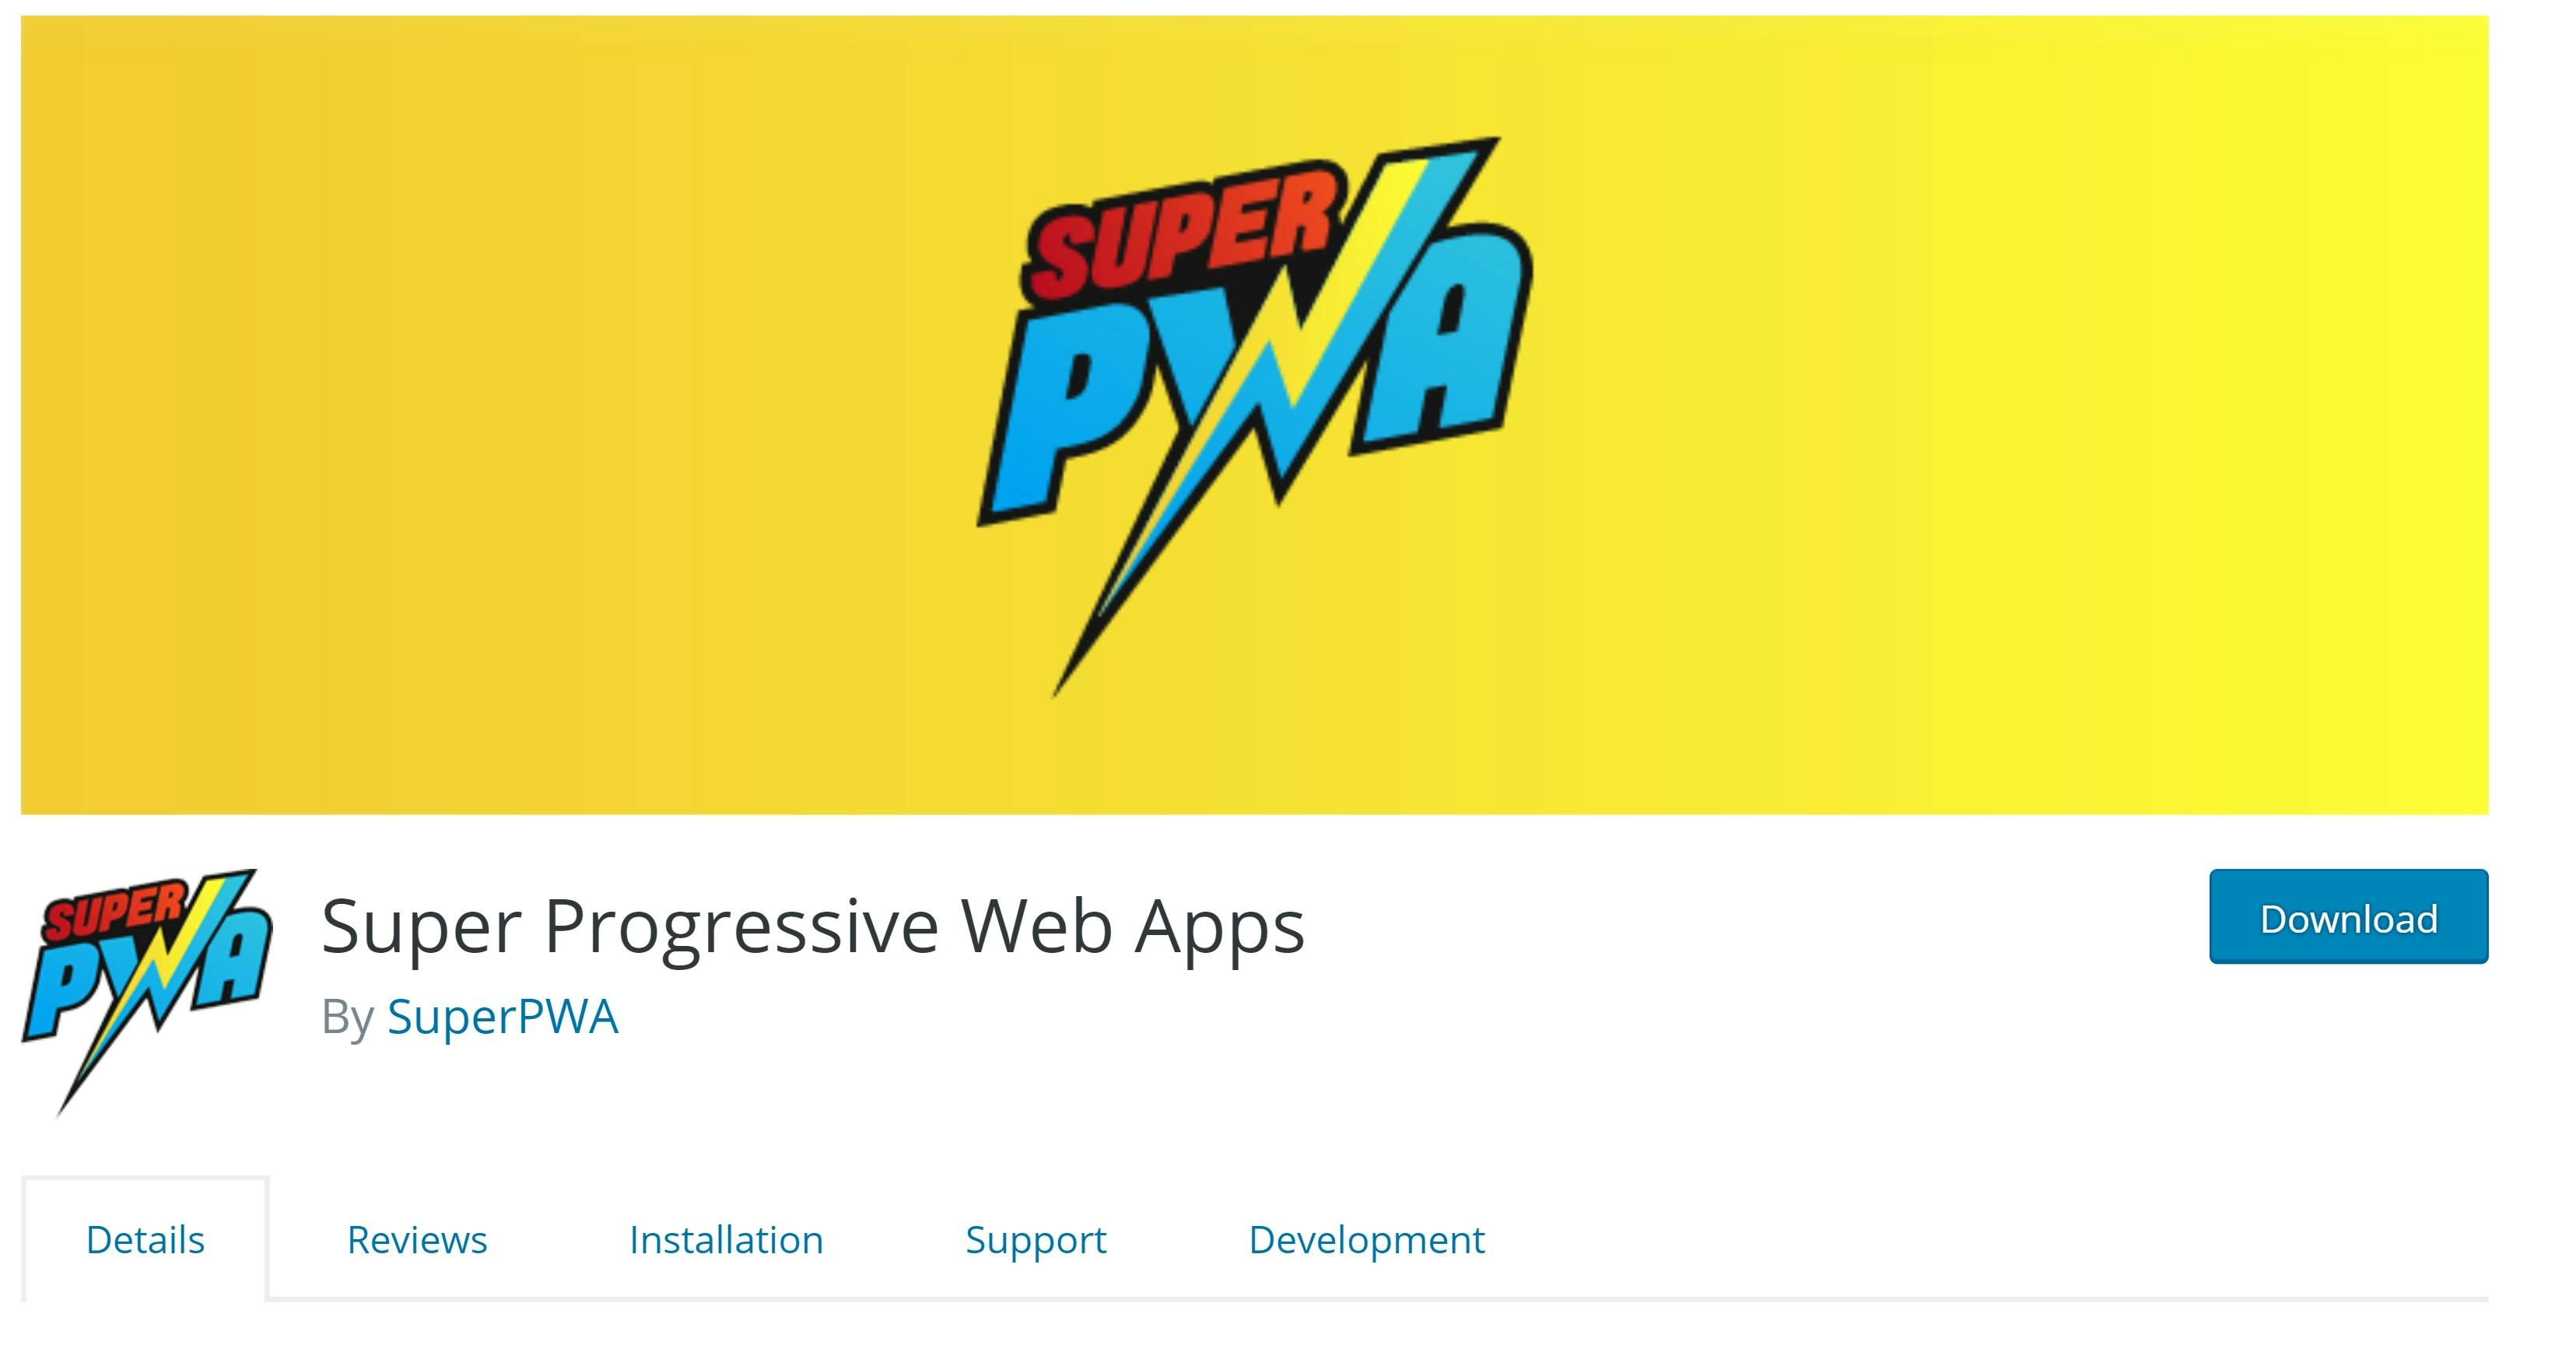 Super Progressive Web Apps